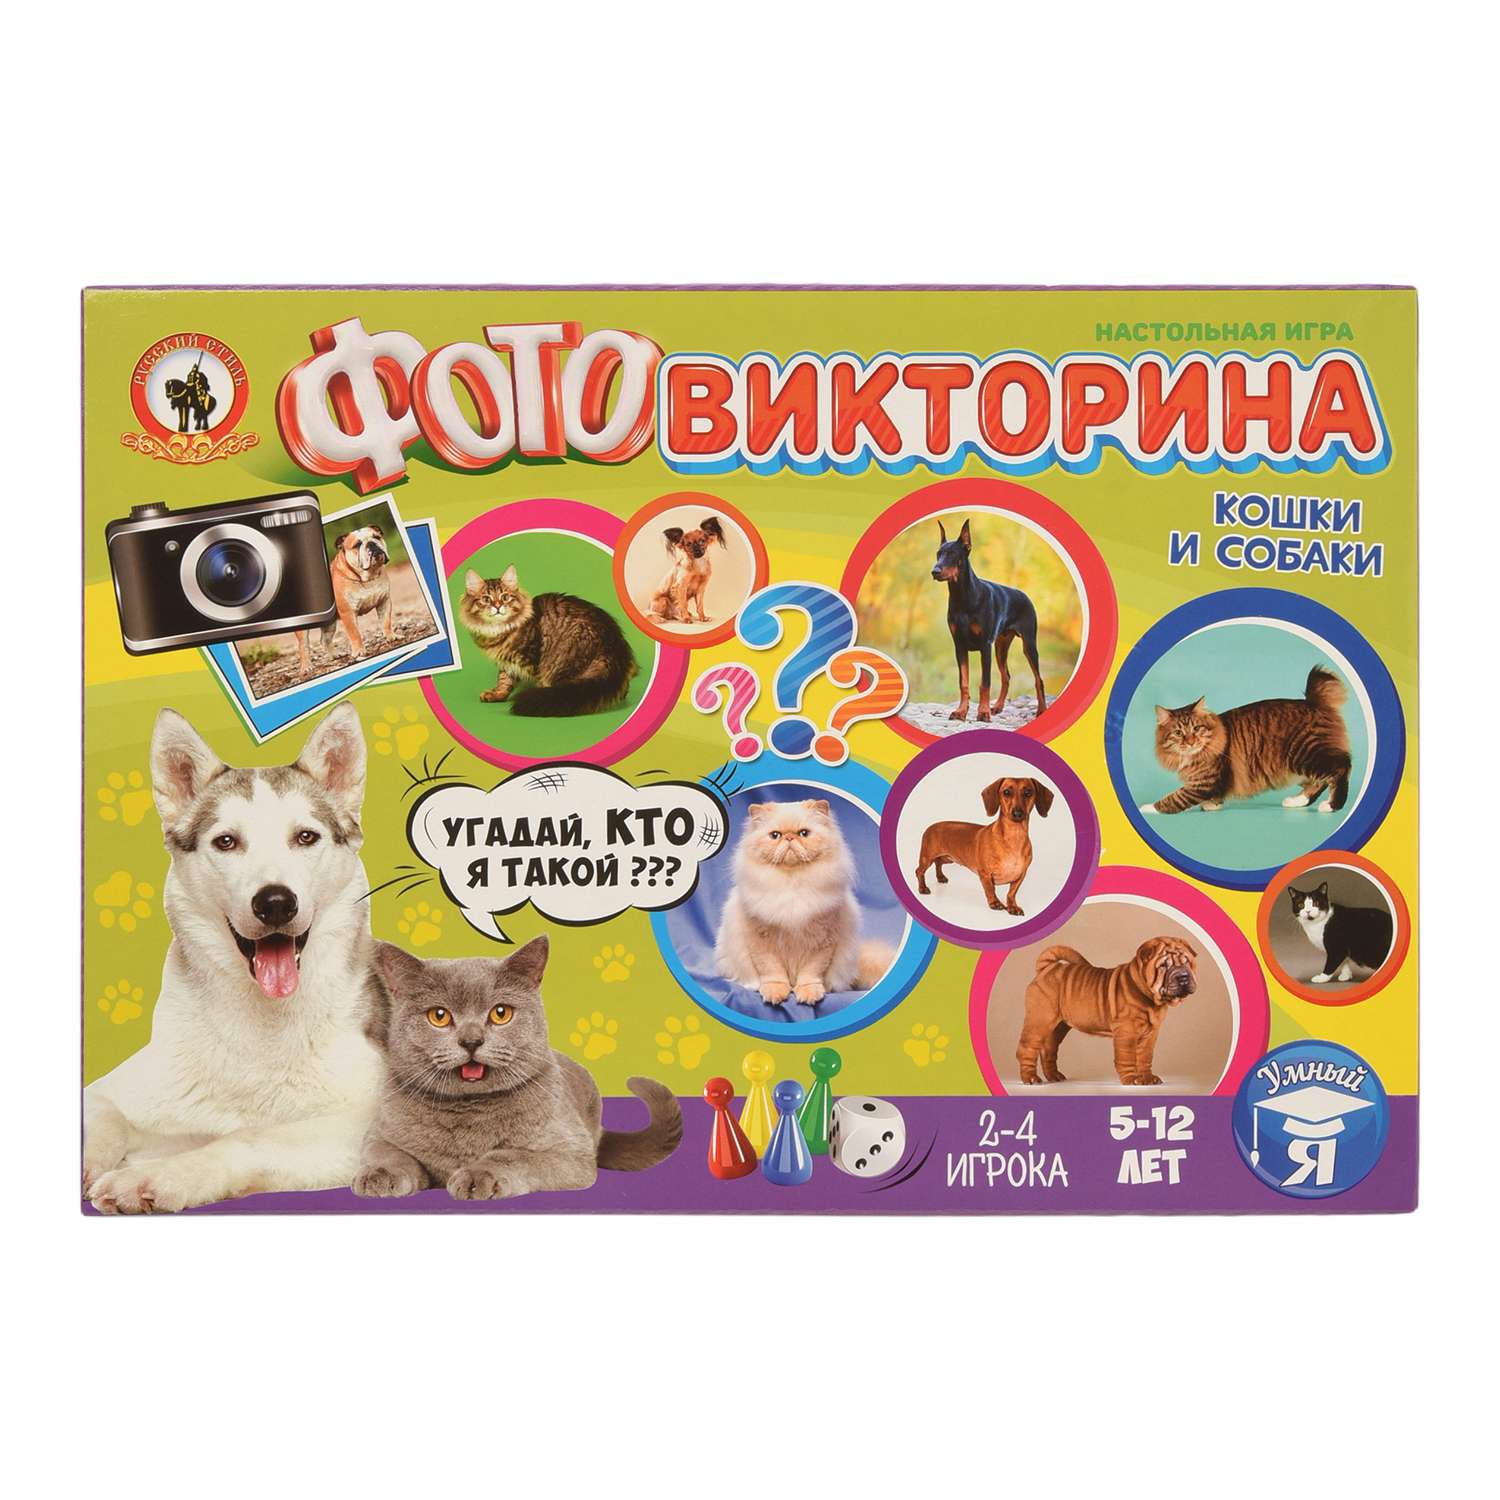 Фотовикторина Русский стиль Кошки и собаки - фото 1